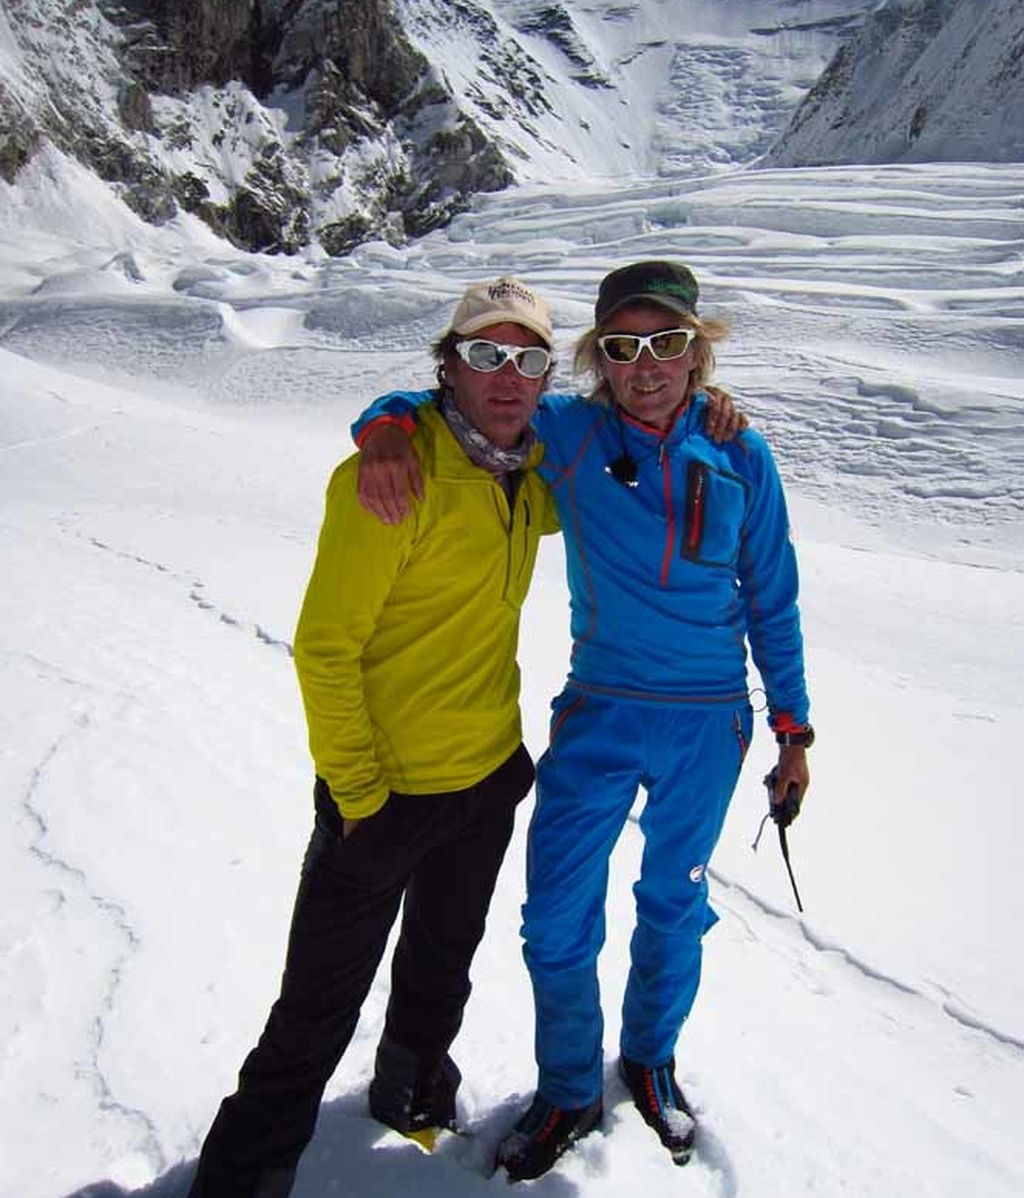 Willie Benegas, el 'Messi del Everest'